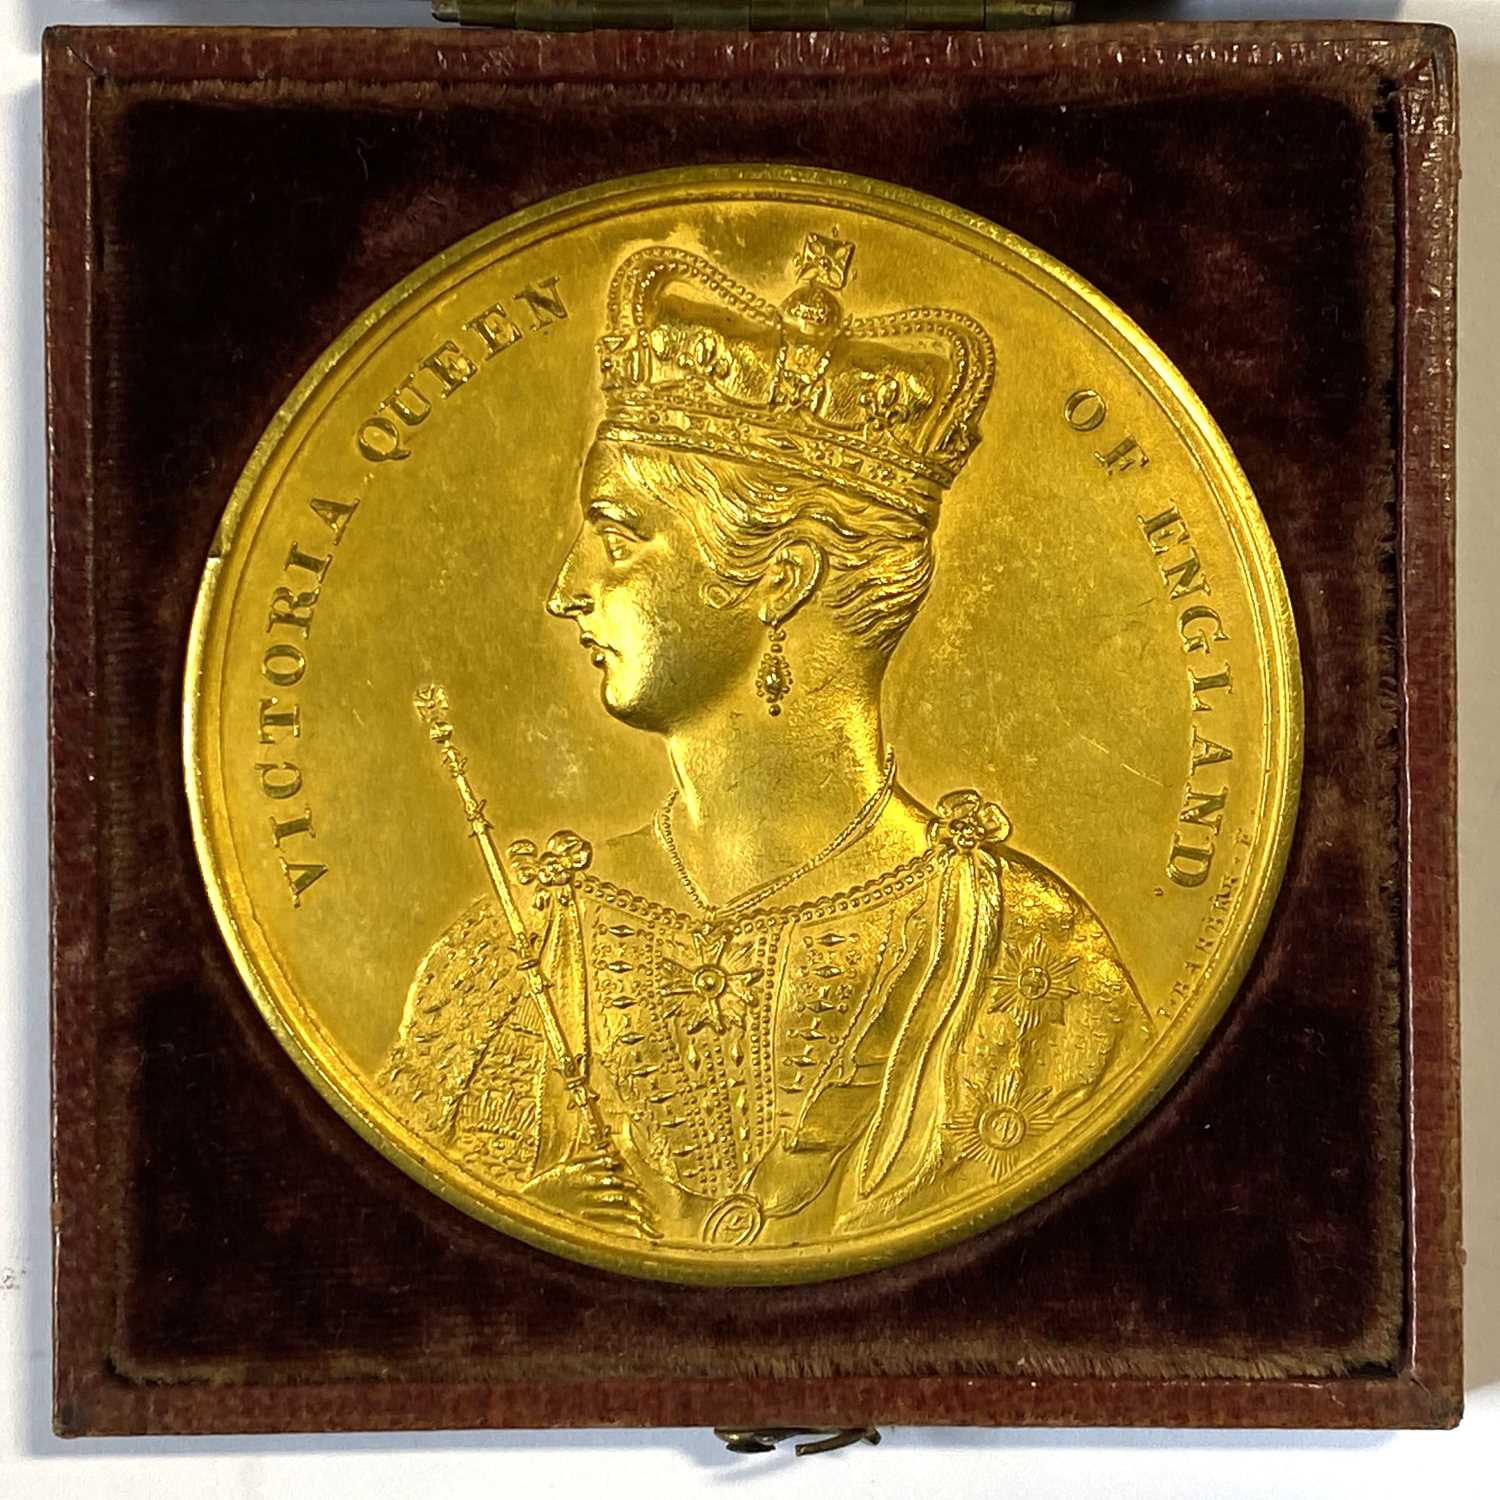 Lot 115 - Victoria Queen of England Coronation medal, gilt